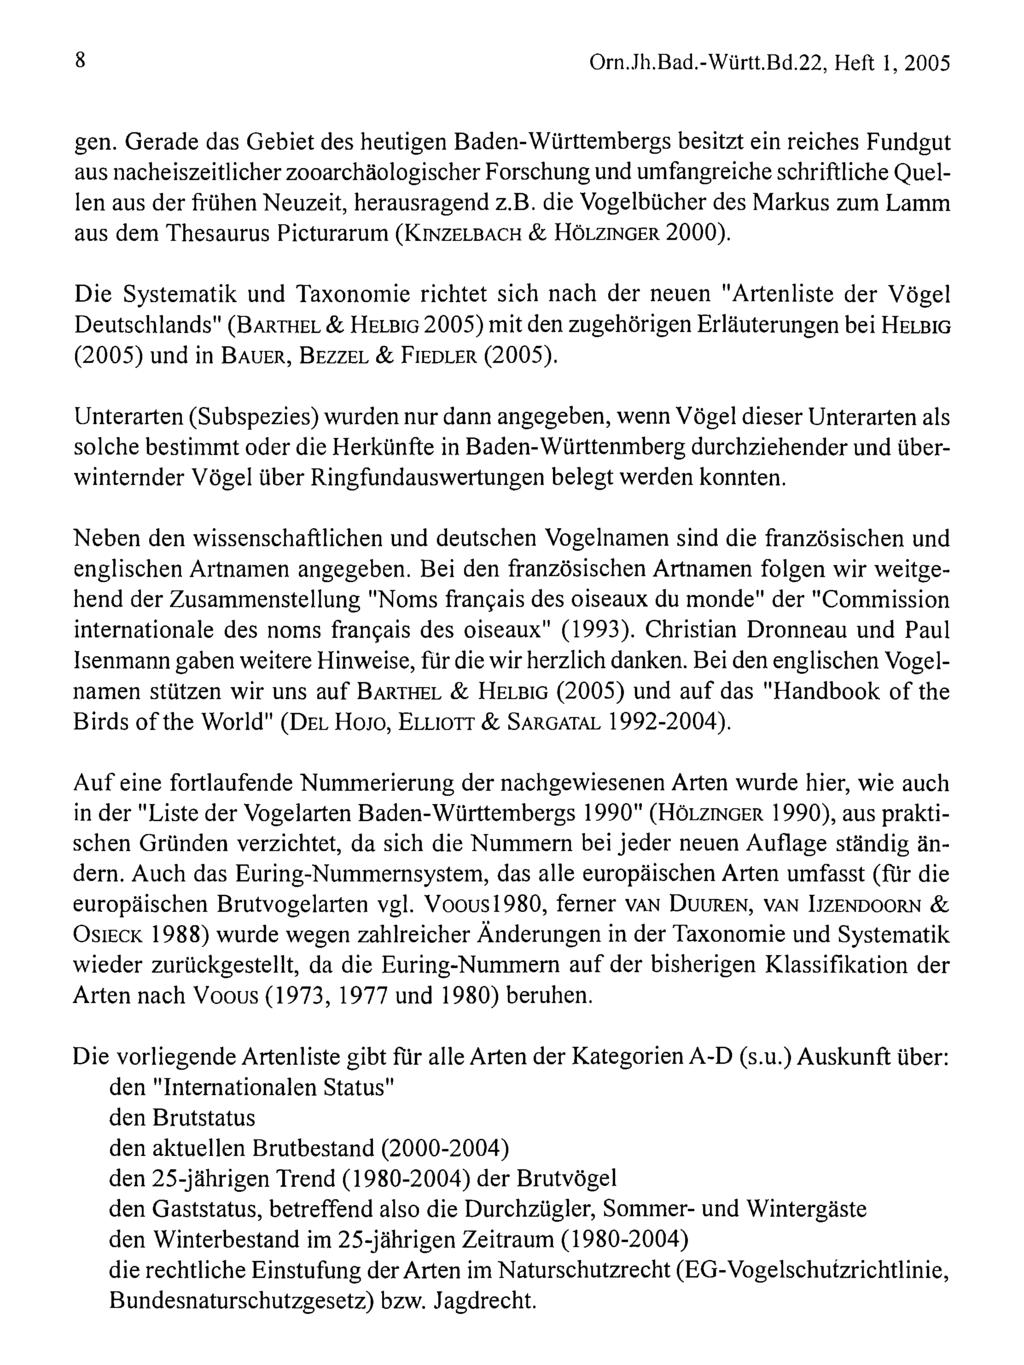 Ornithologische esellschaft Baden-Württemberg, download unter www.biologiezentrum.at 8 Orn.Jh.Bad.-Württ.Bd.22, Heft 1, 2005 gen.